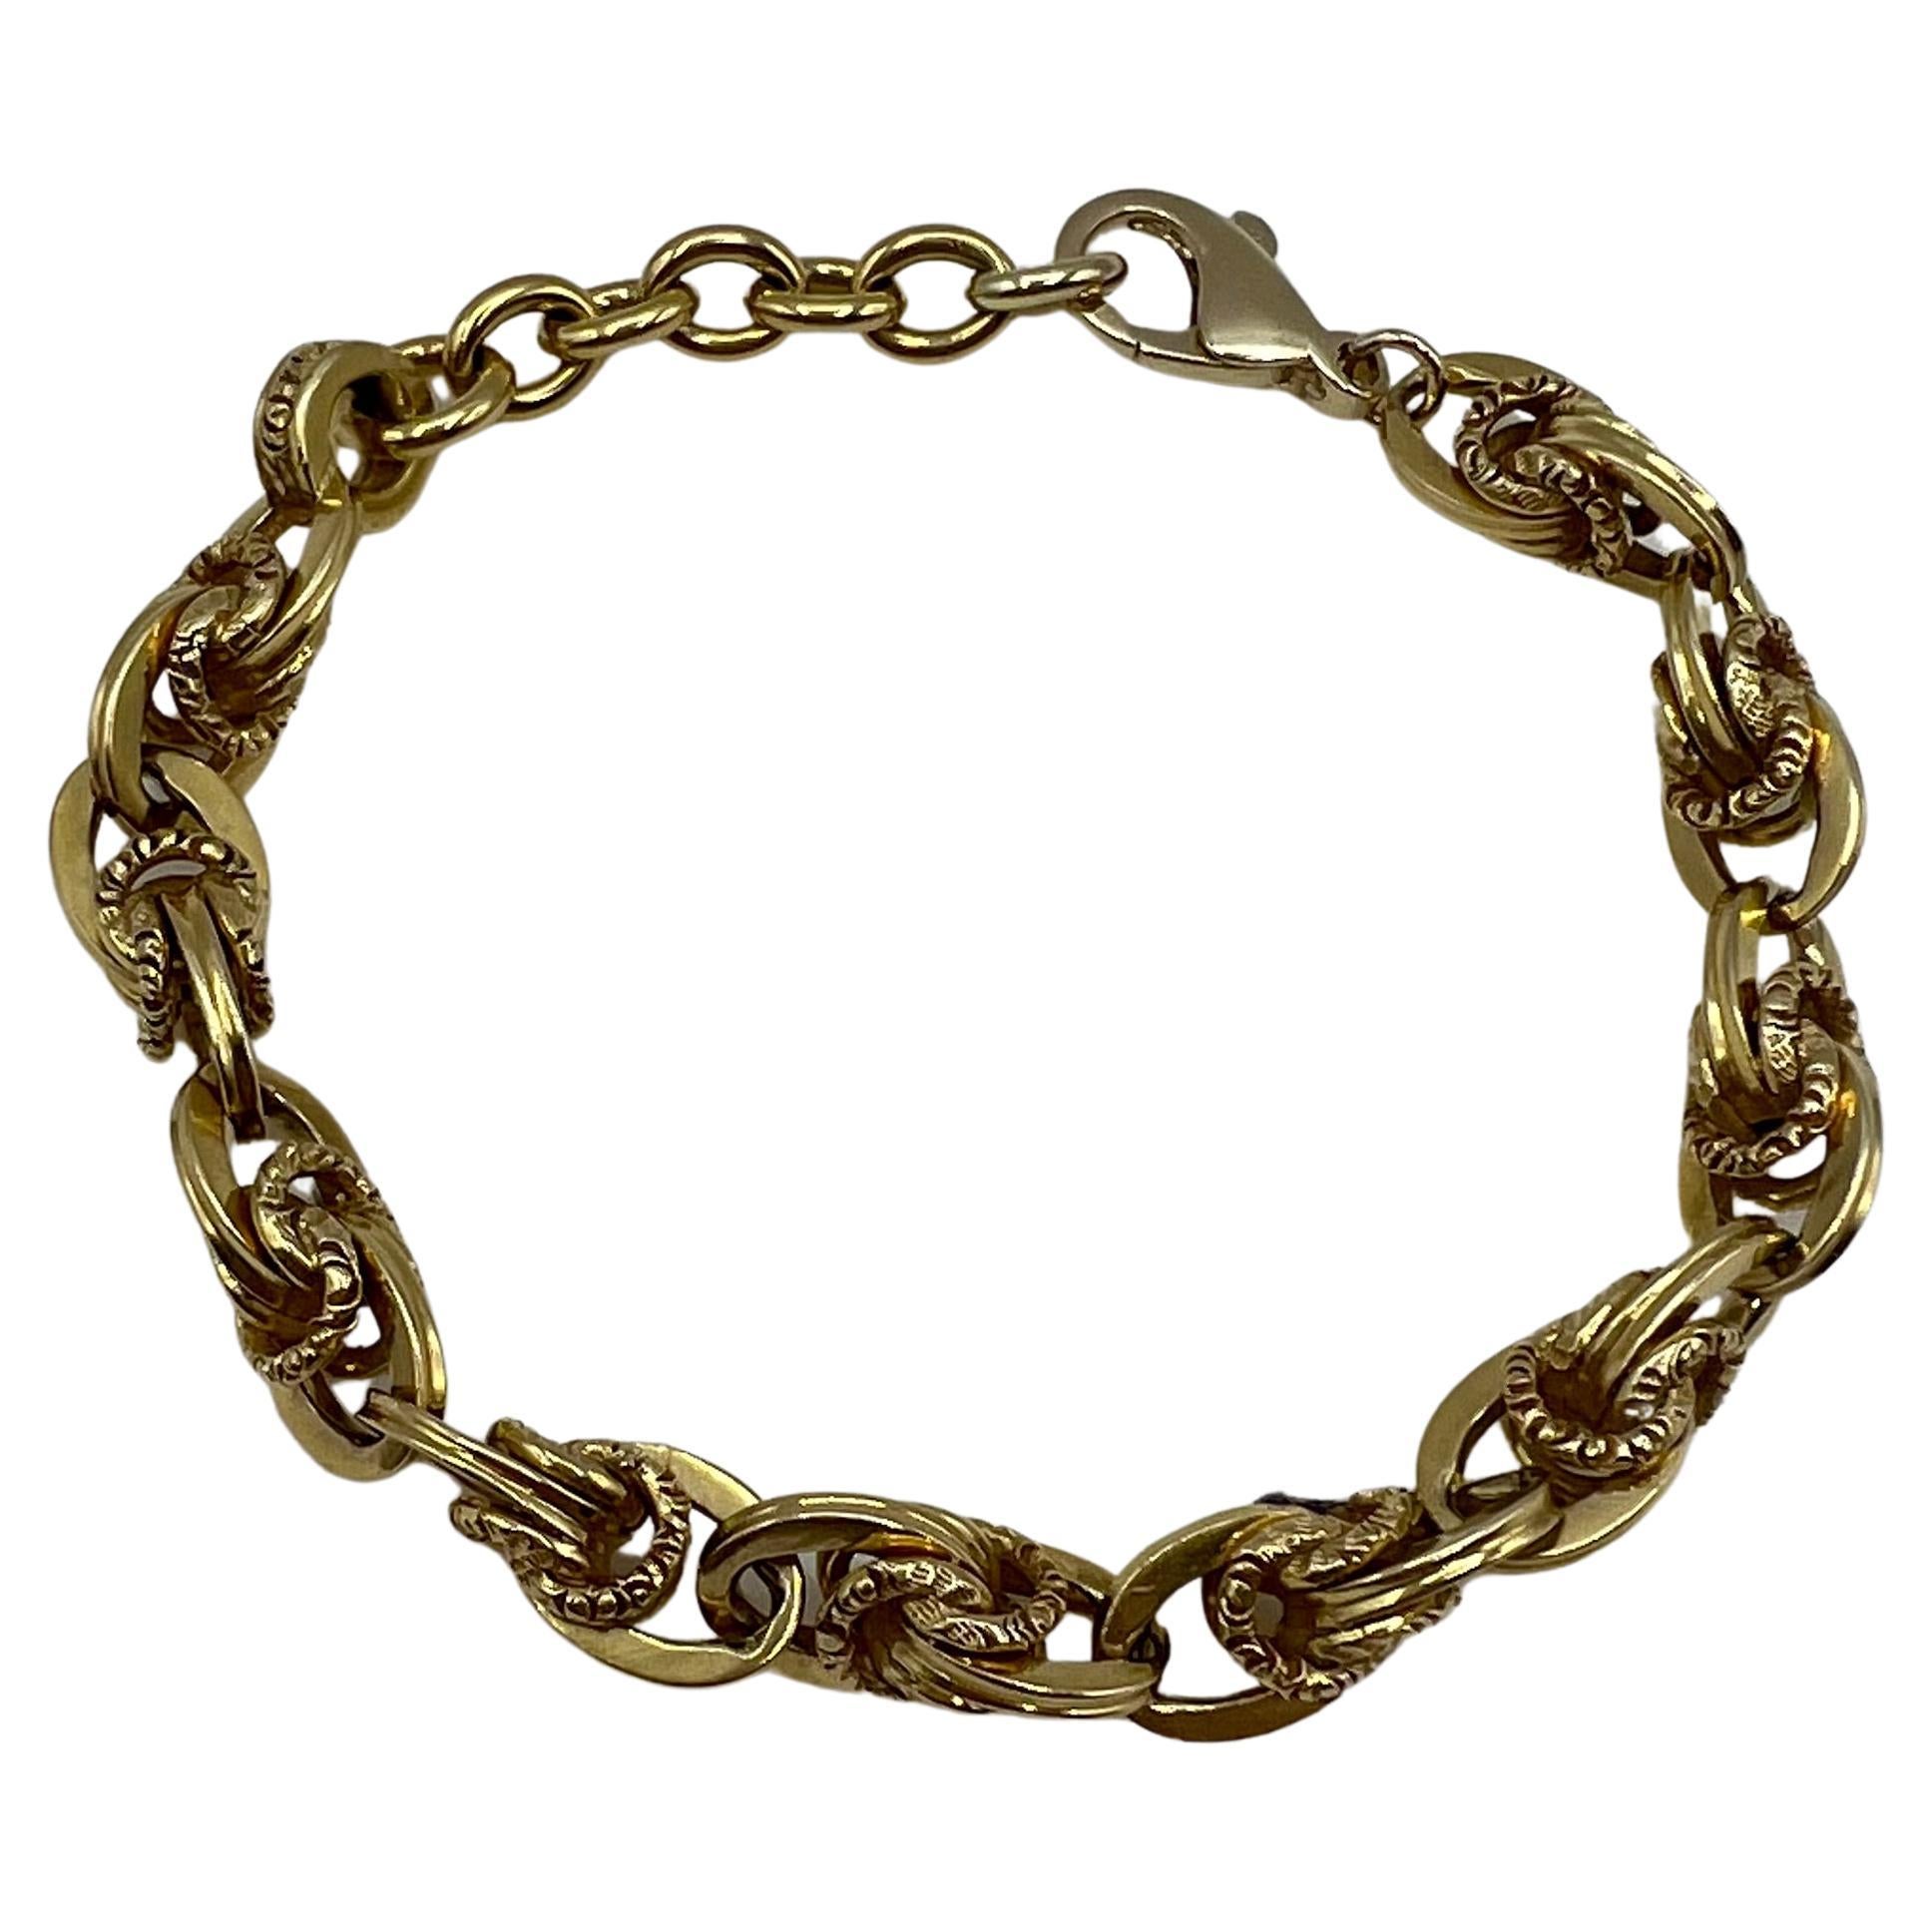 Solid Gold Filigree Link Bracelet in 14 Karat Yellow Gold